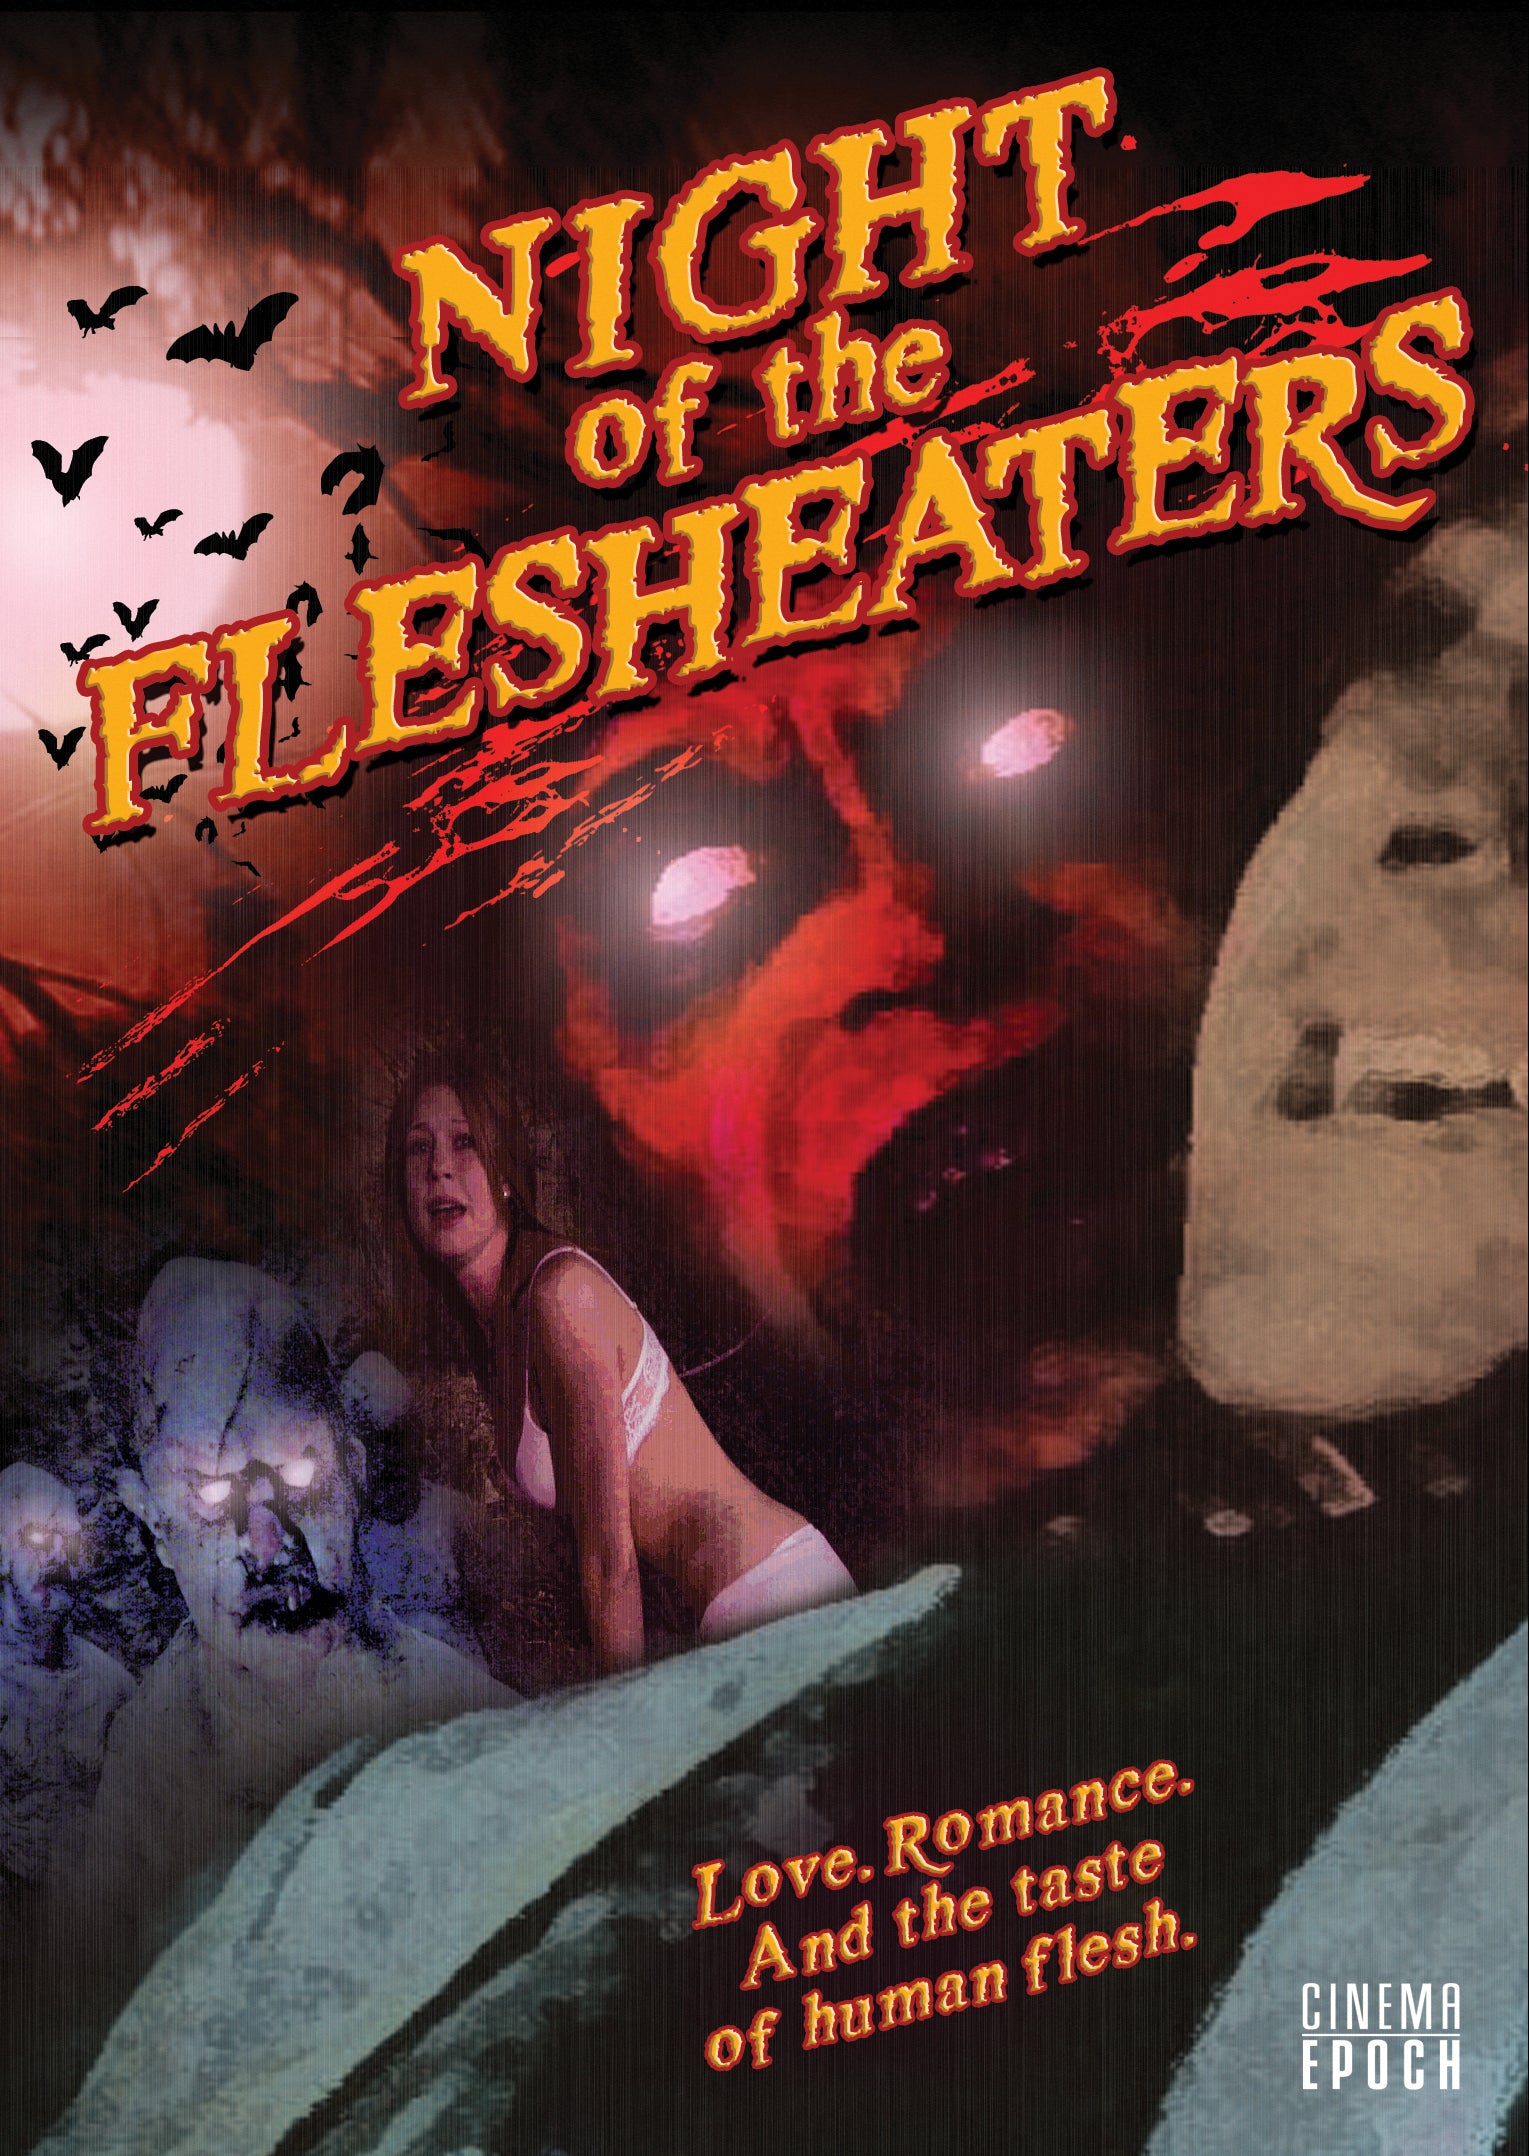 NIGHT OF THE FLESHEATERS DVD